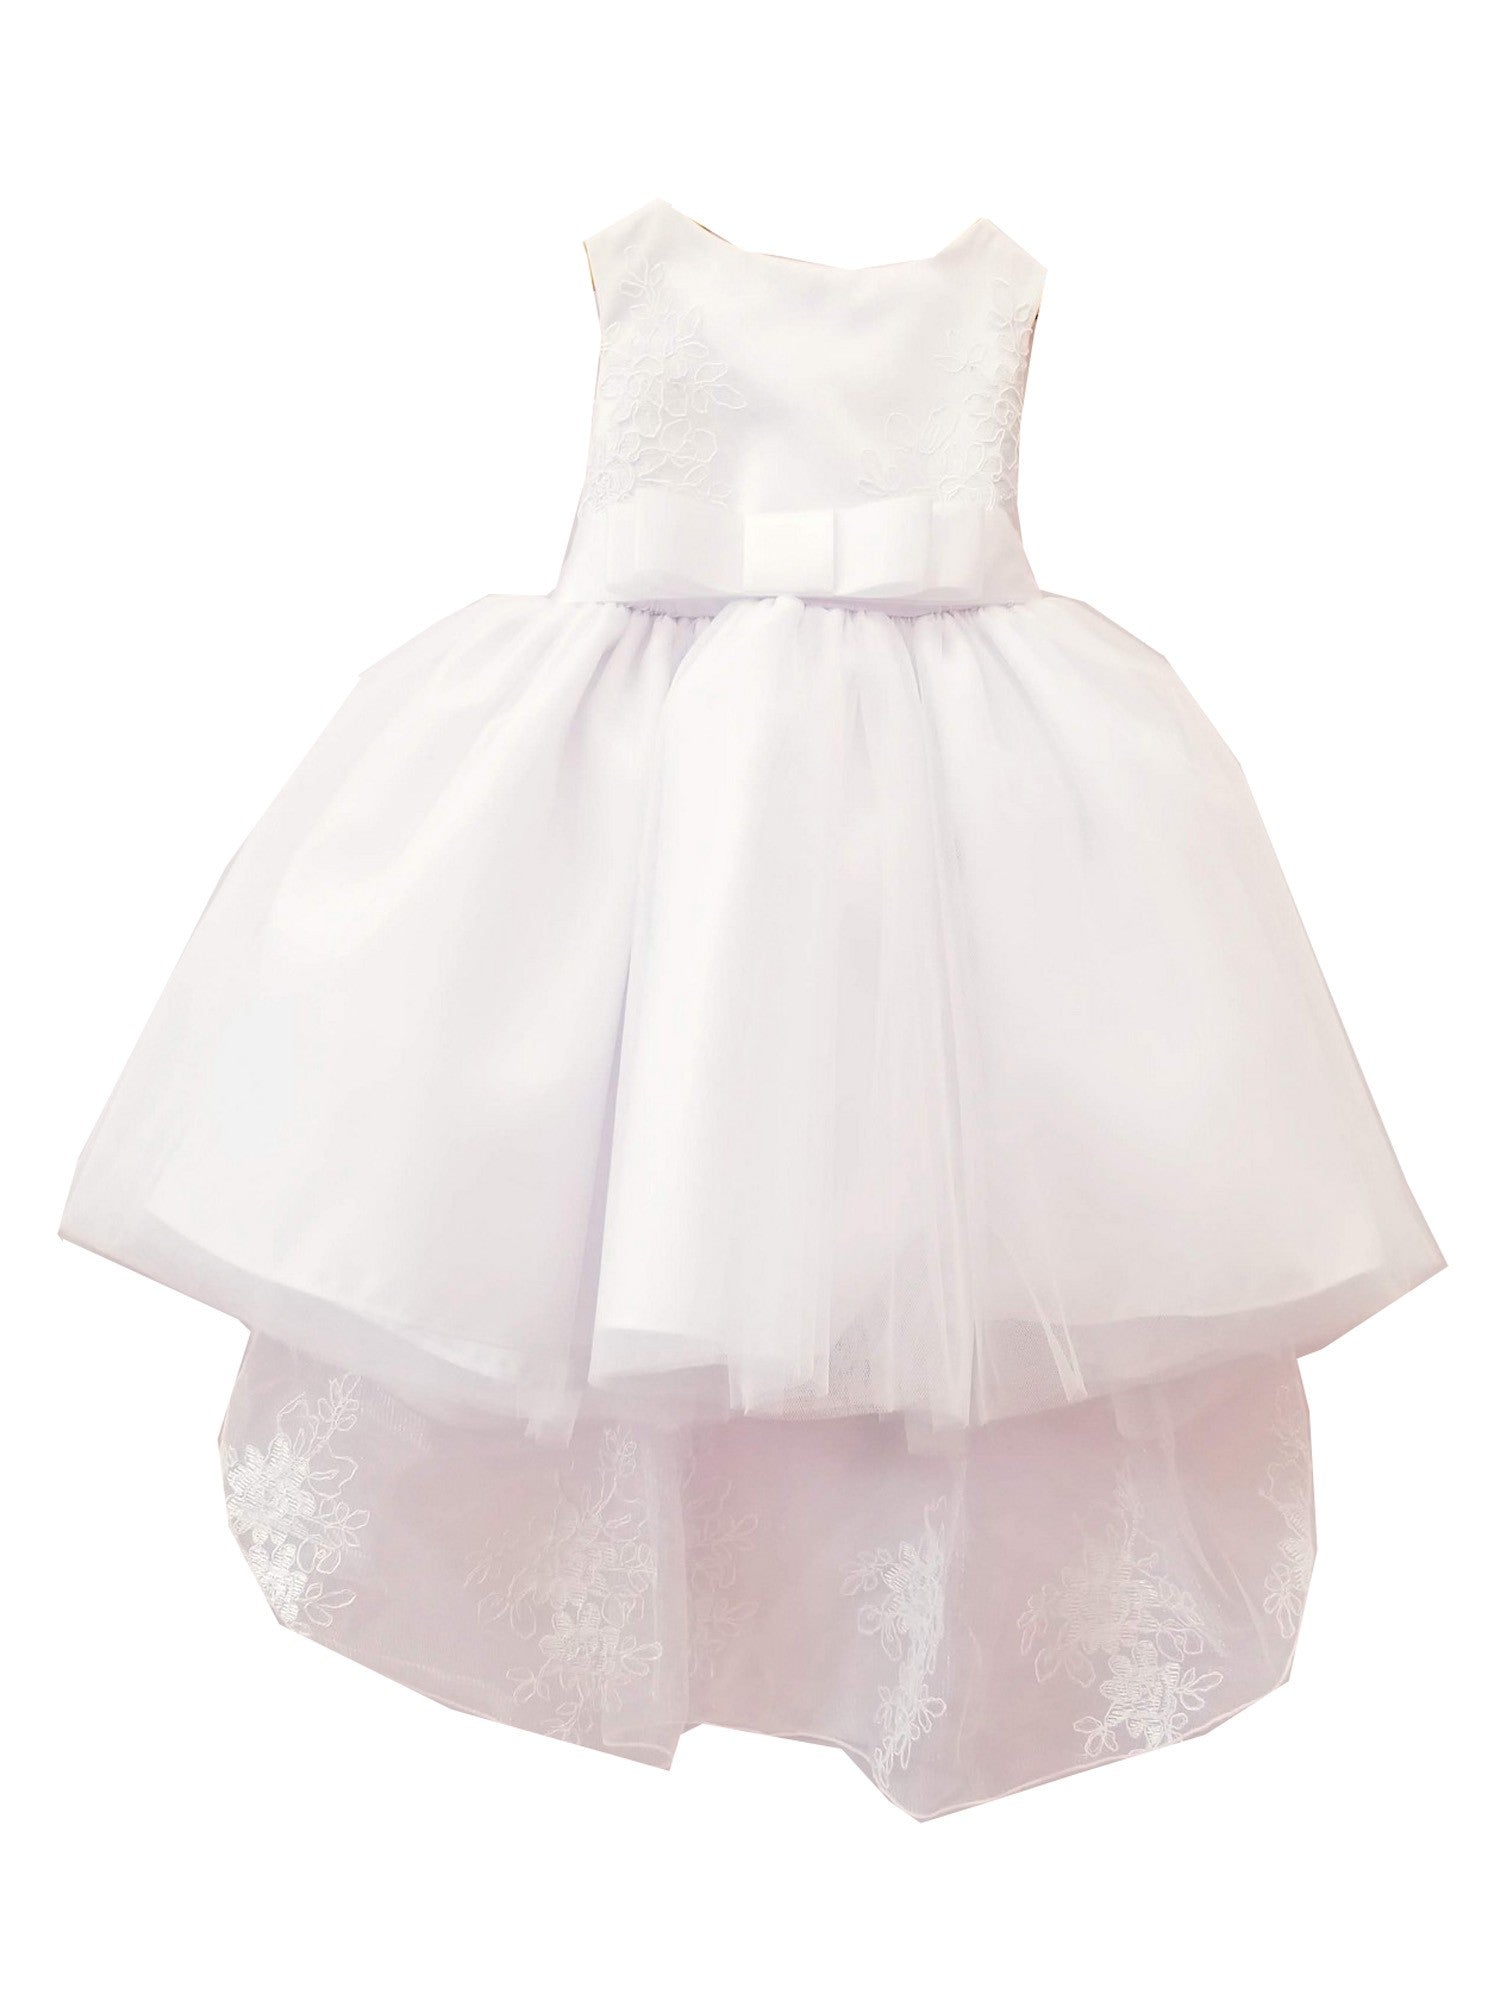 Swea Pea & Lilli White Embroidered Satin Ribbon Tulle Dress - Size: 3-6M | Pink Princess